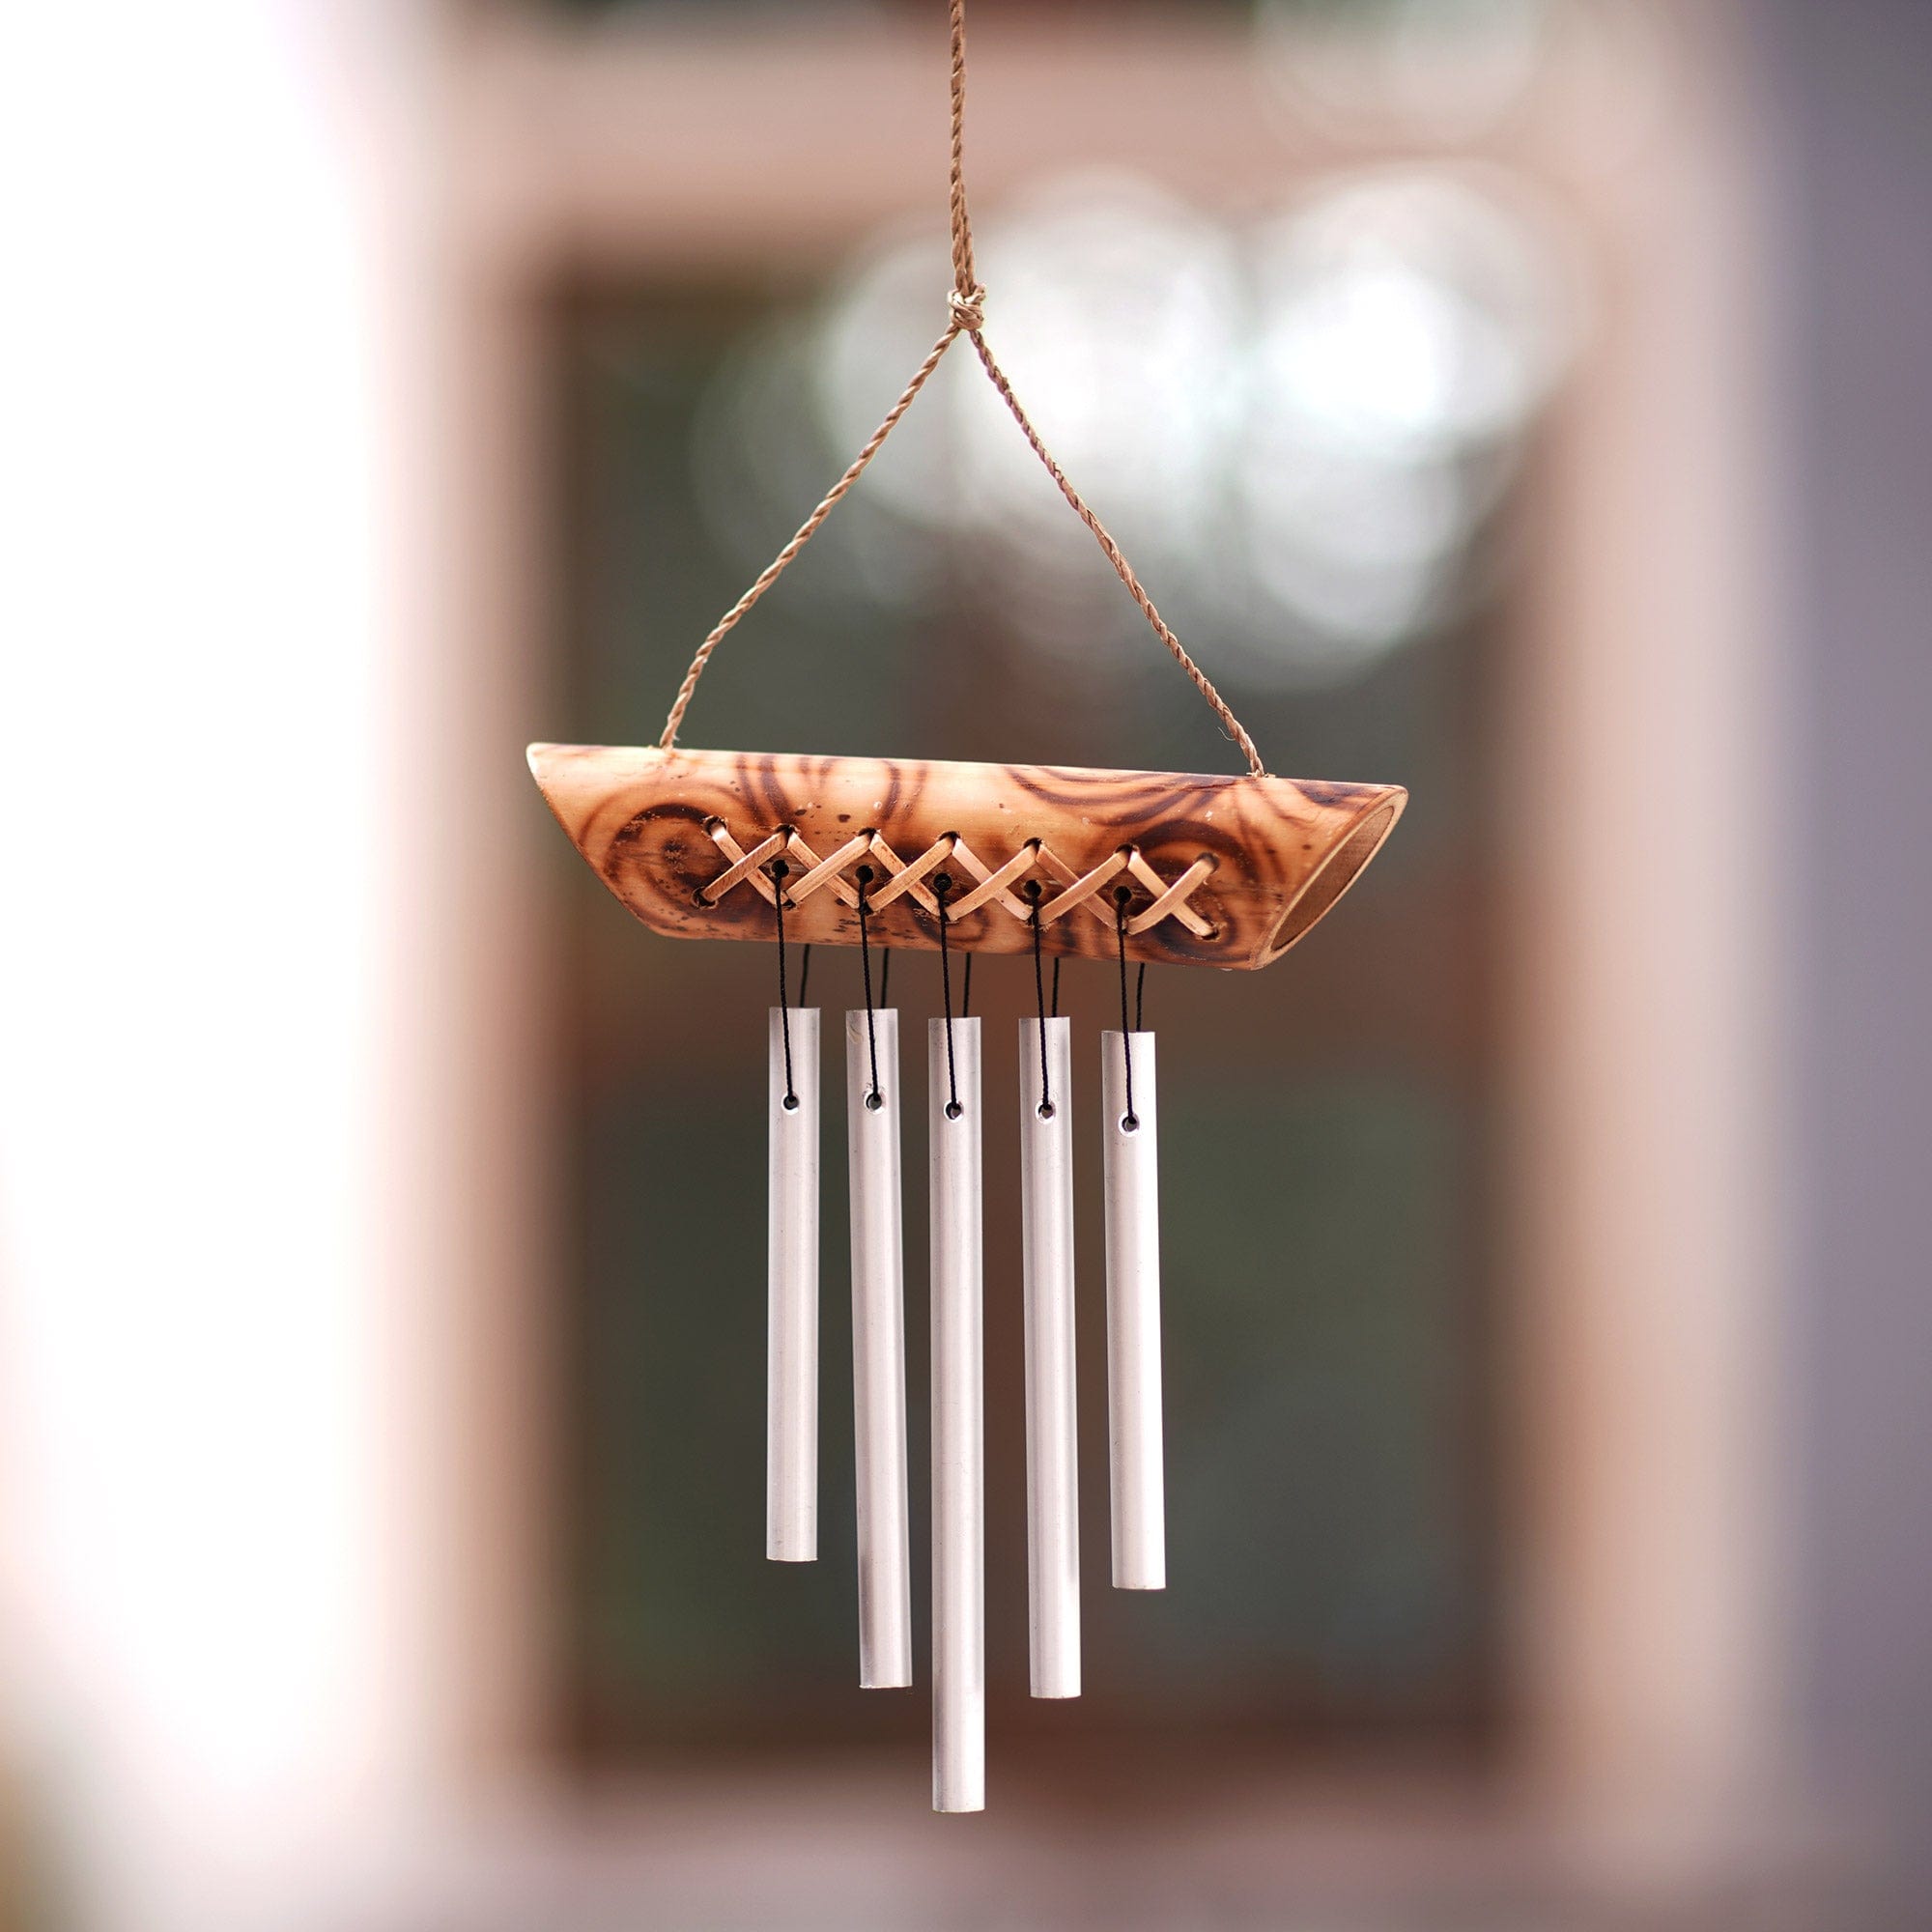 Handmade Bamboo Aluminum Mini Wind Chimes in Brown - Weaving The Tones